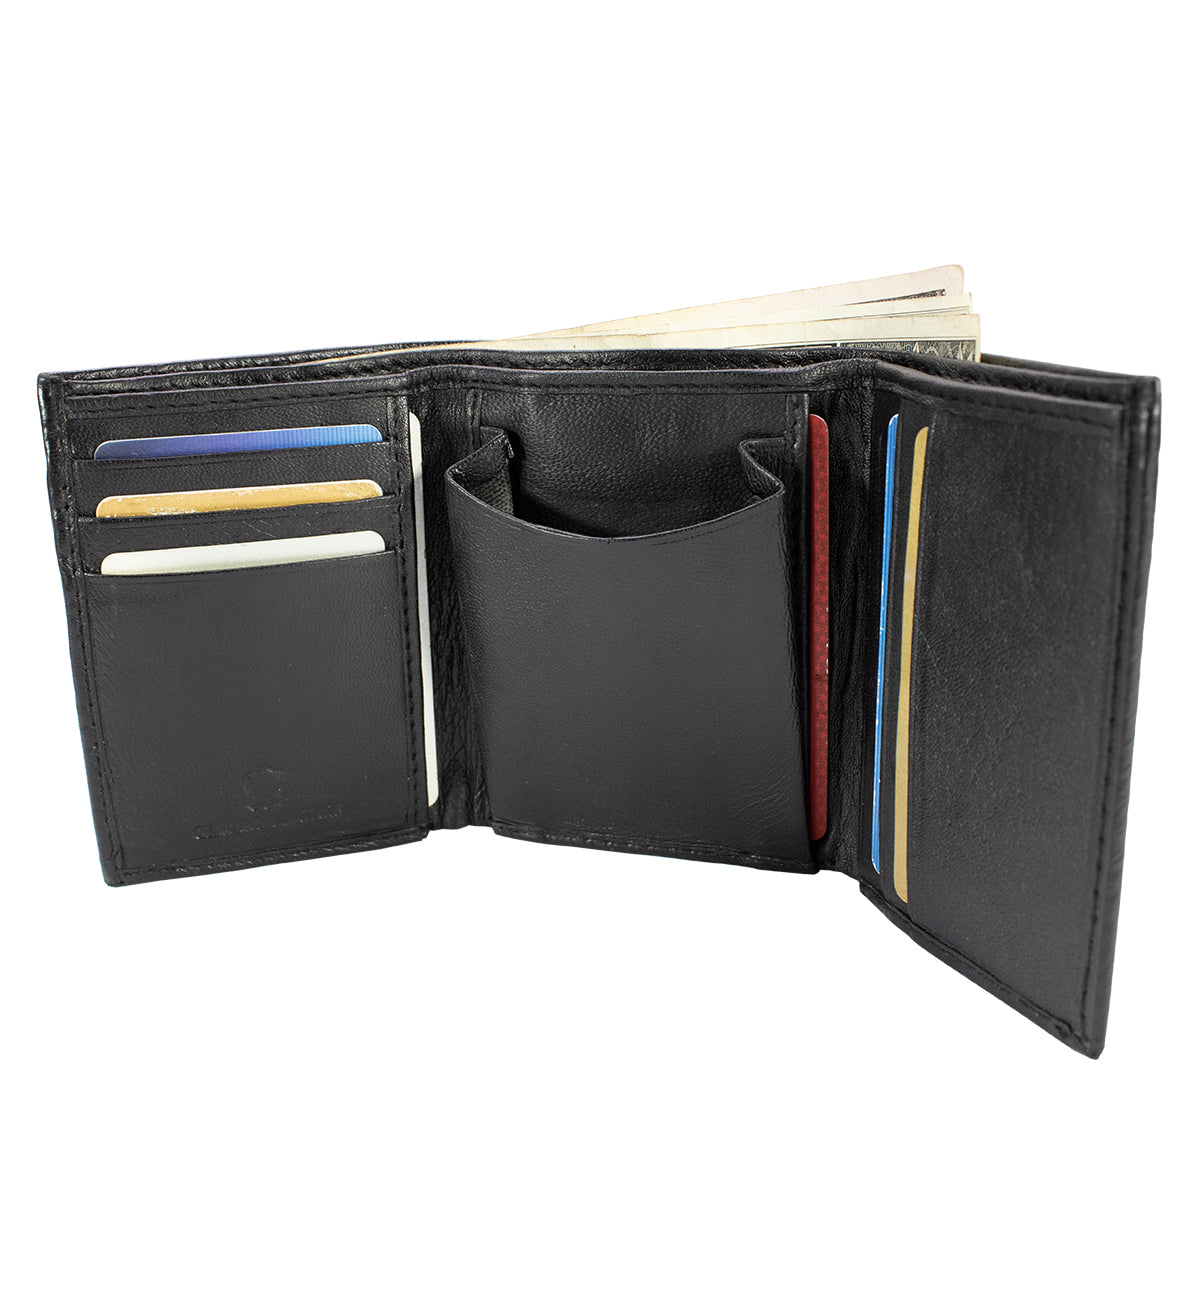 Black Genuine Leather Men's Trifold Wallet Coin Pocket Holder New